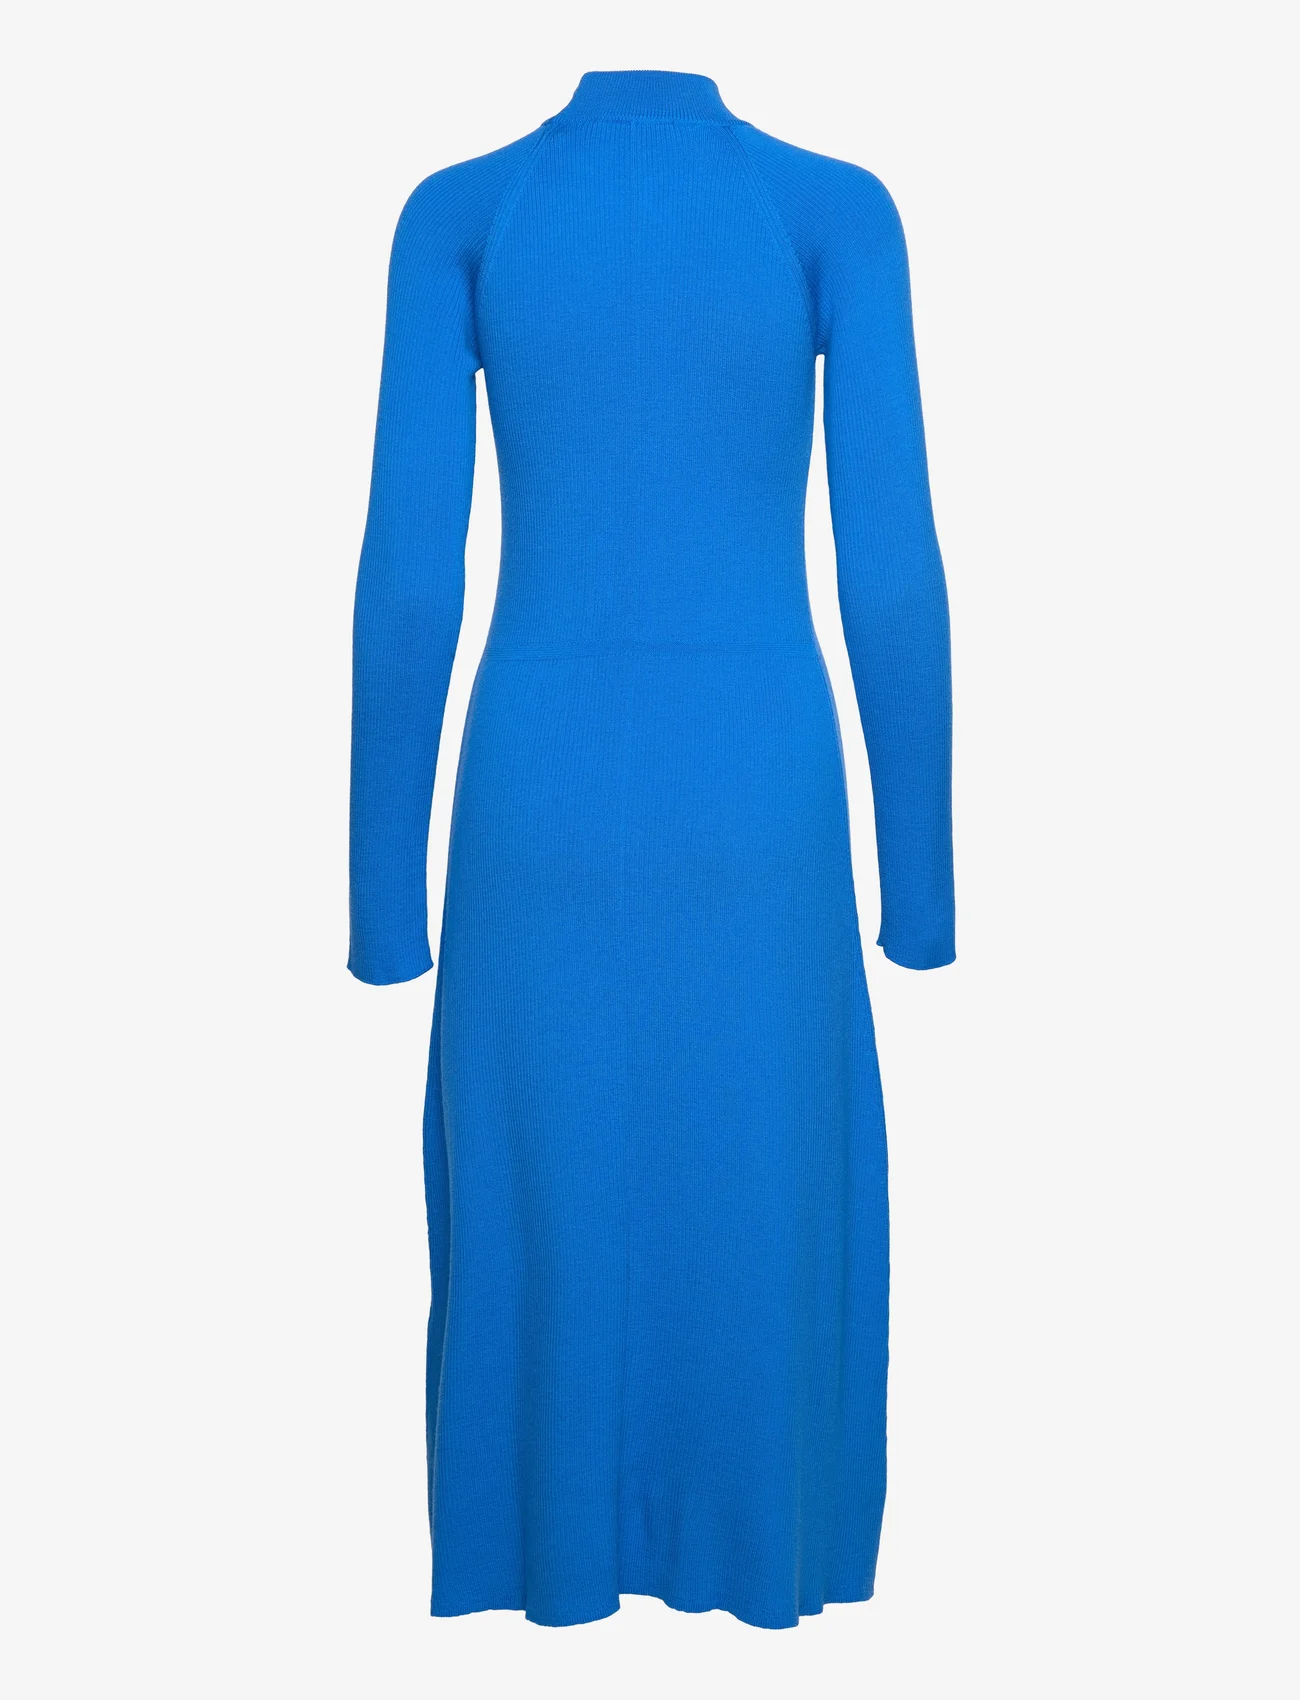 IVY OAK - Rib Knit Dress - etuikleider - cobalt blue - 1